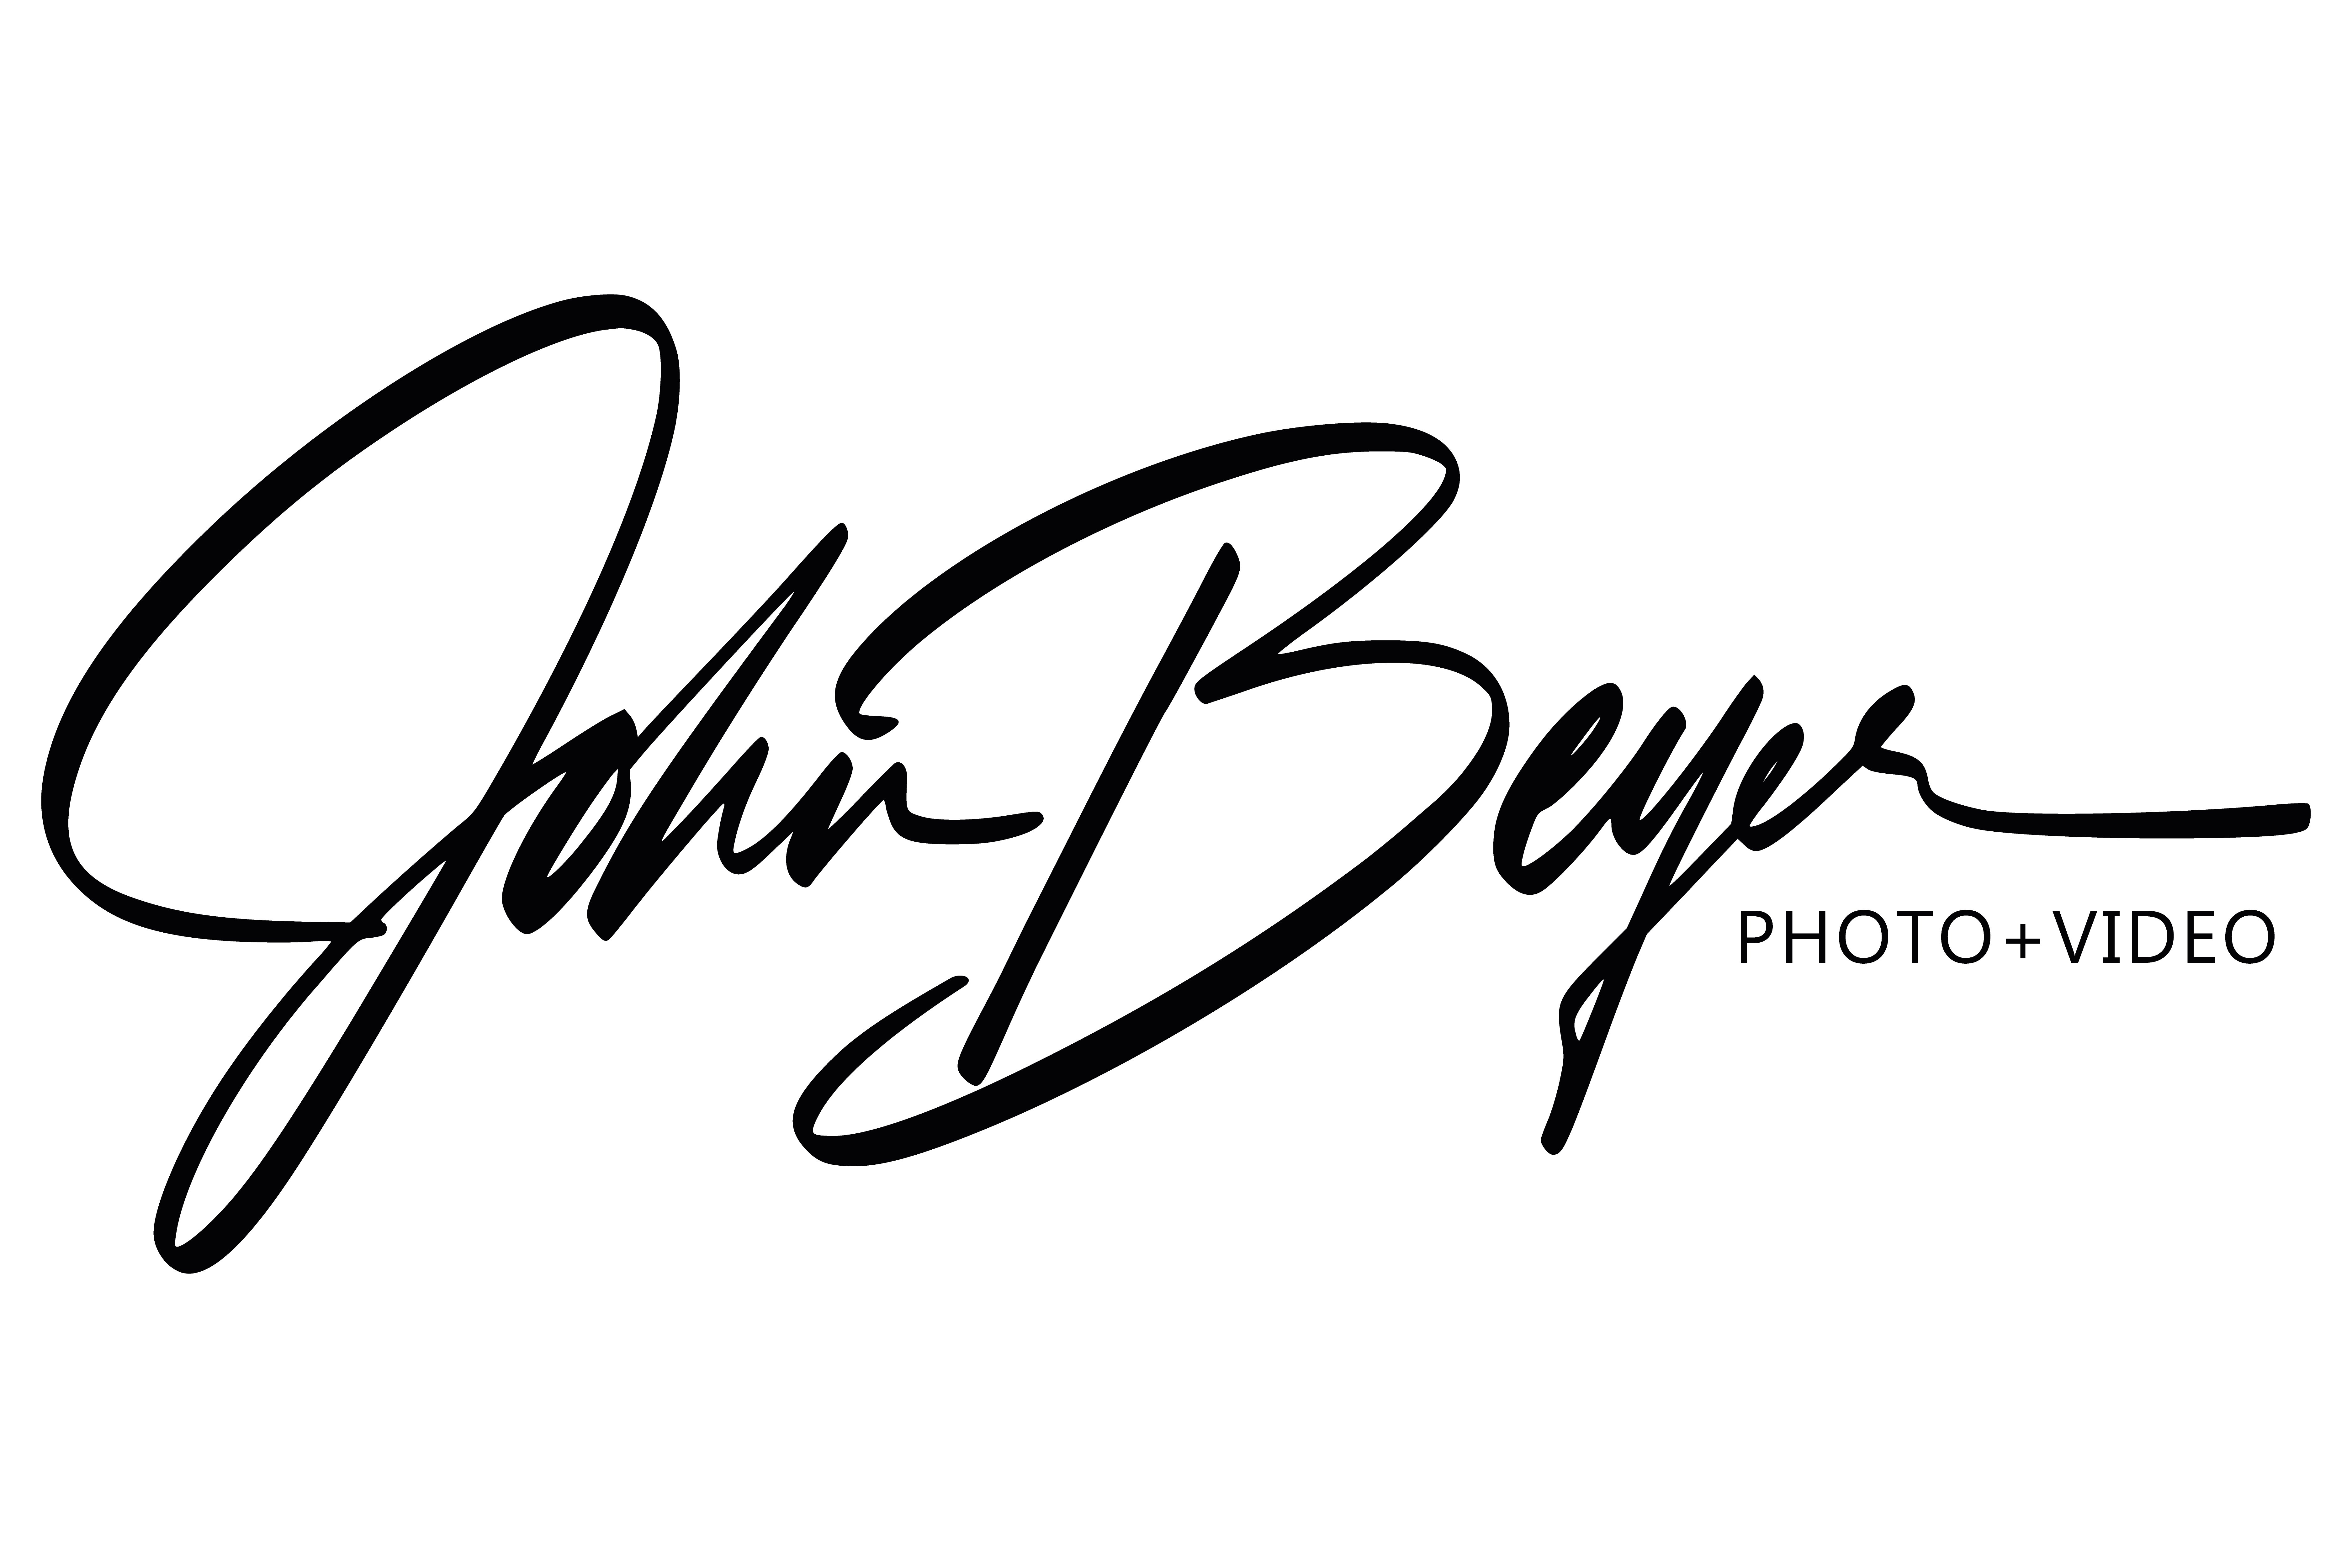 John Beyer Photo + Video Logo